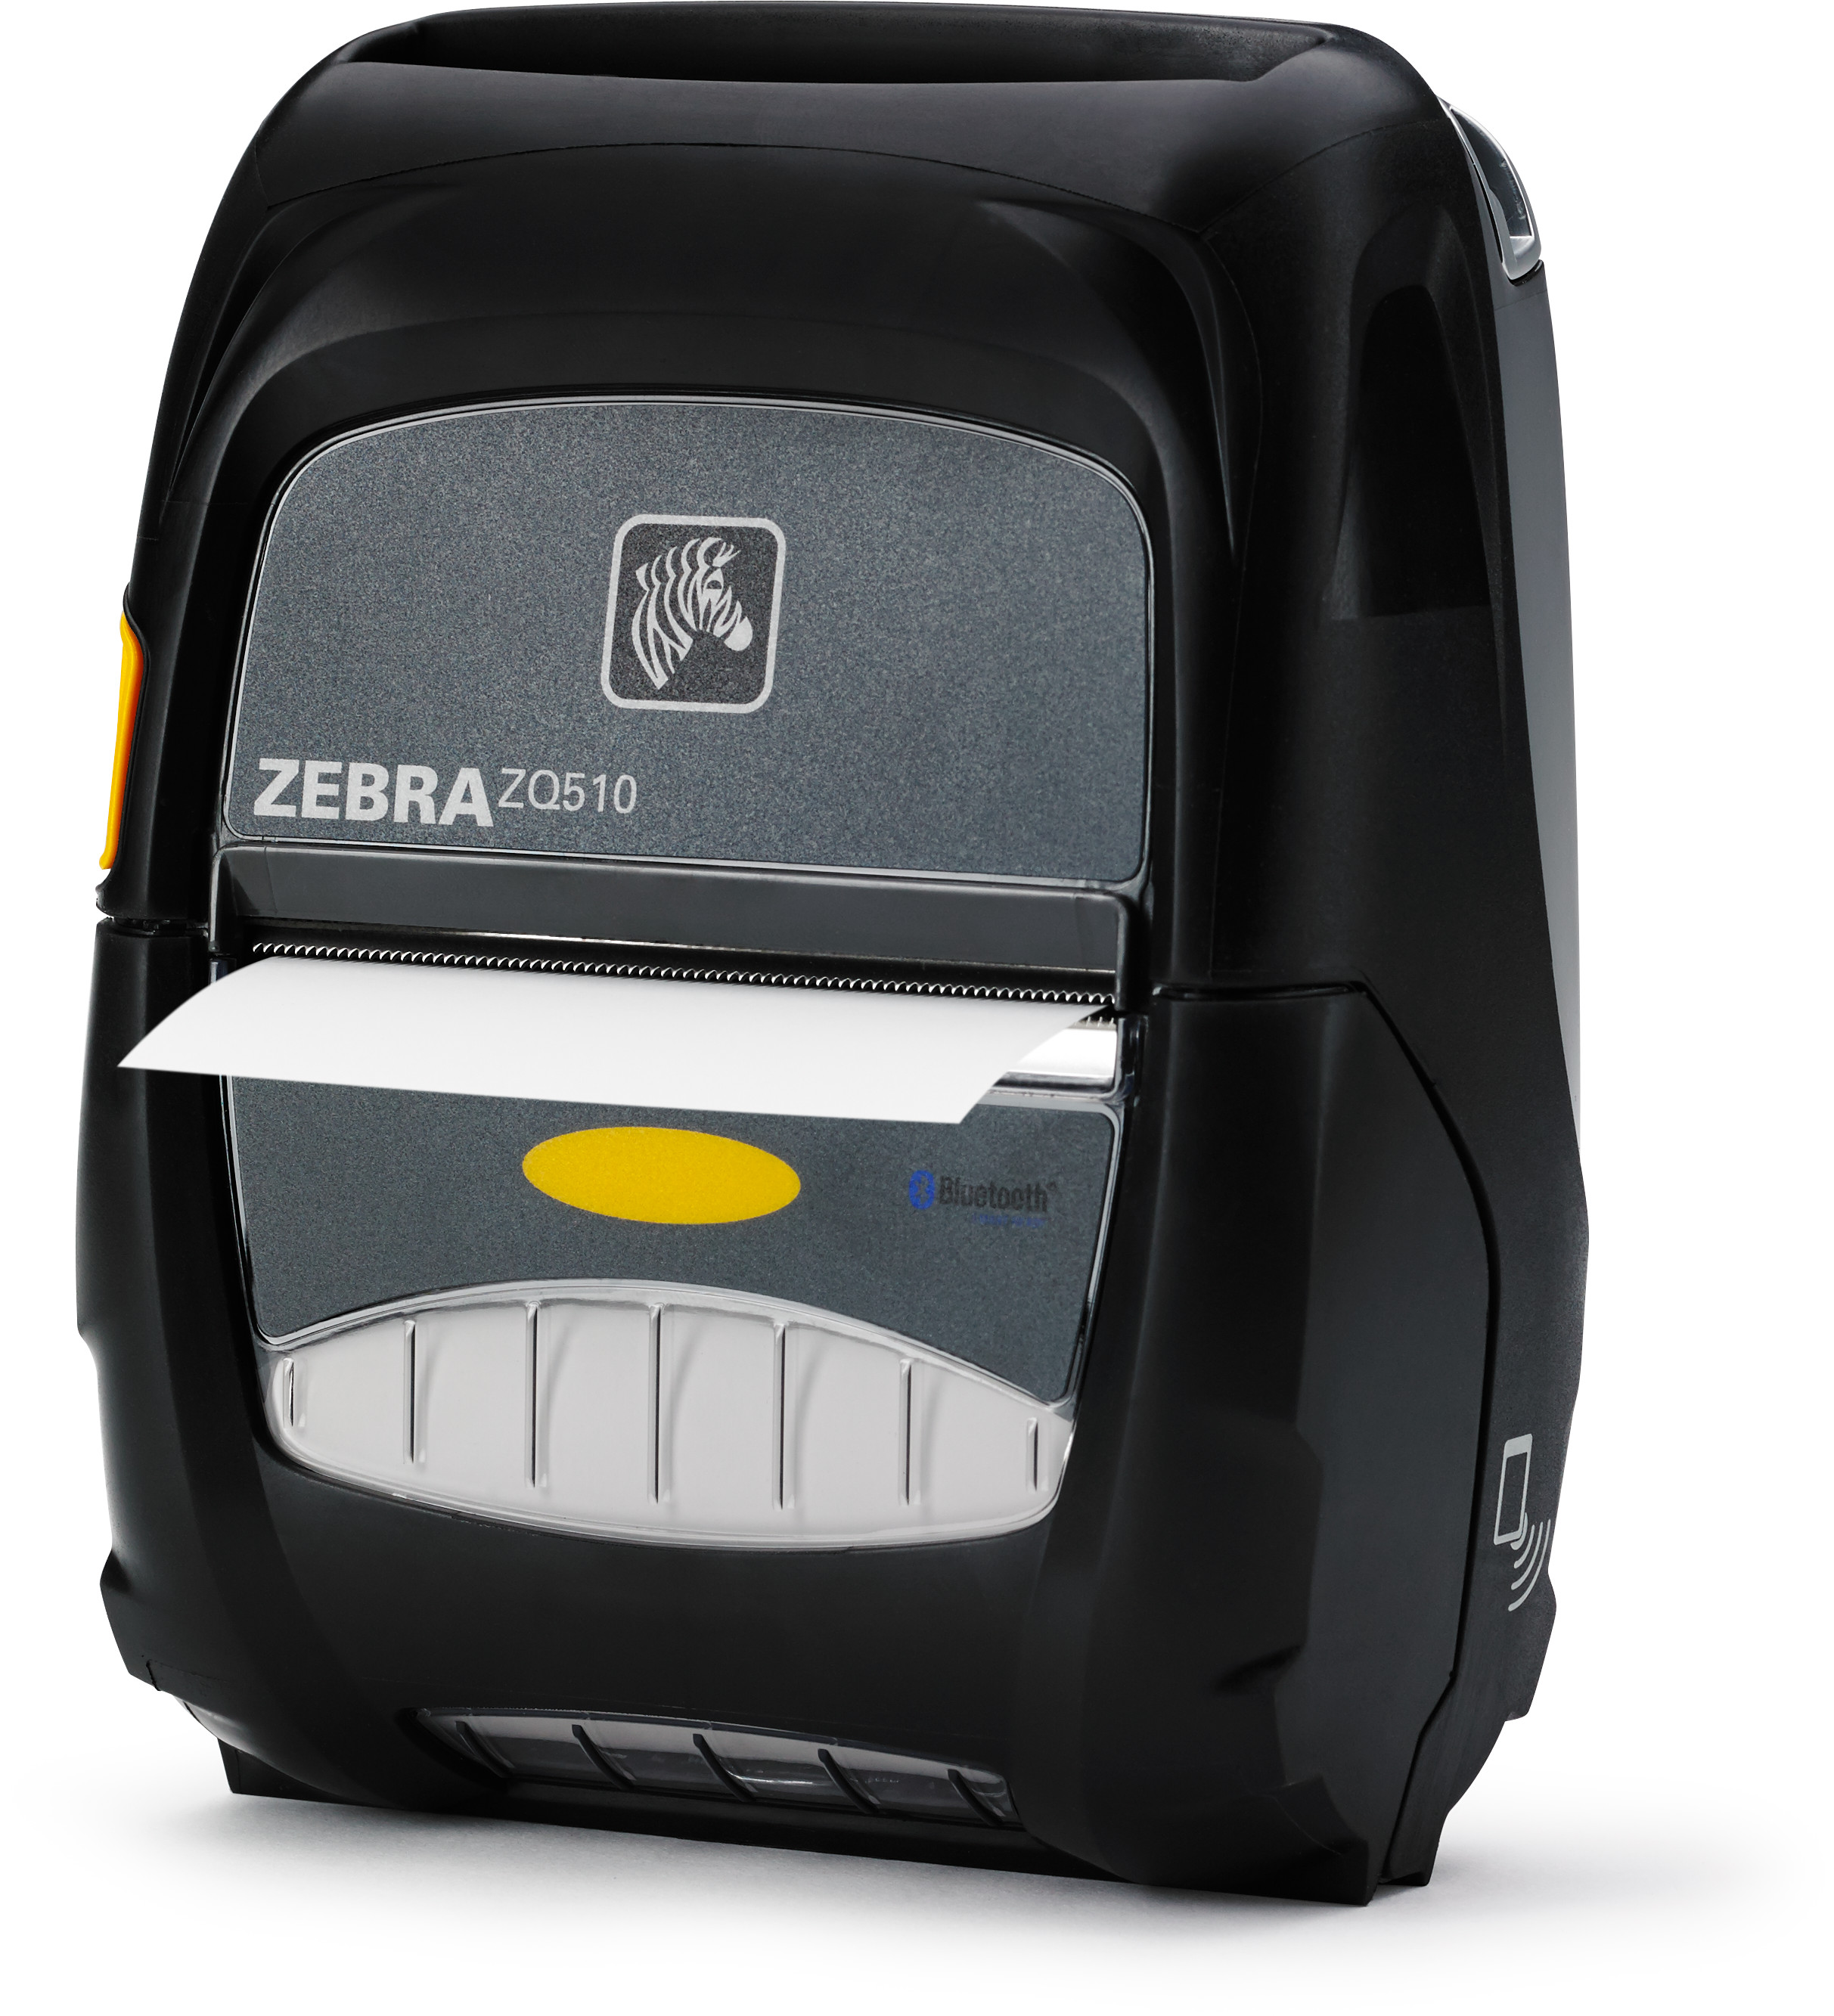 ZQ510 Stampante portatile Zebra 